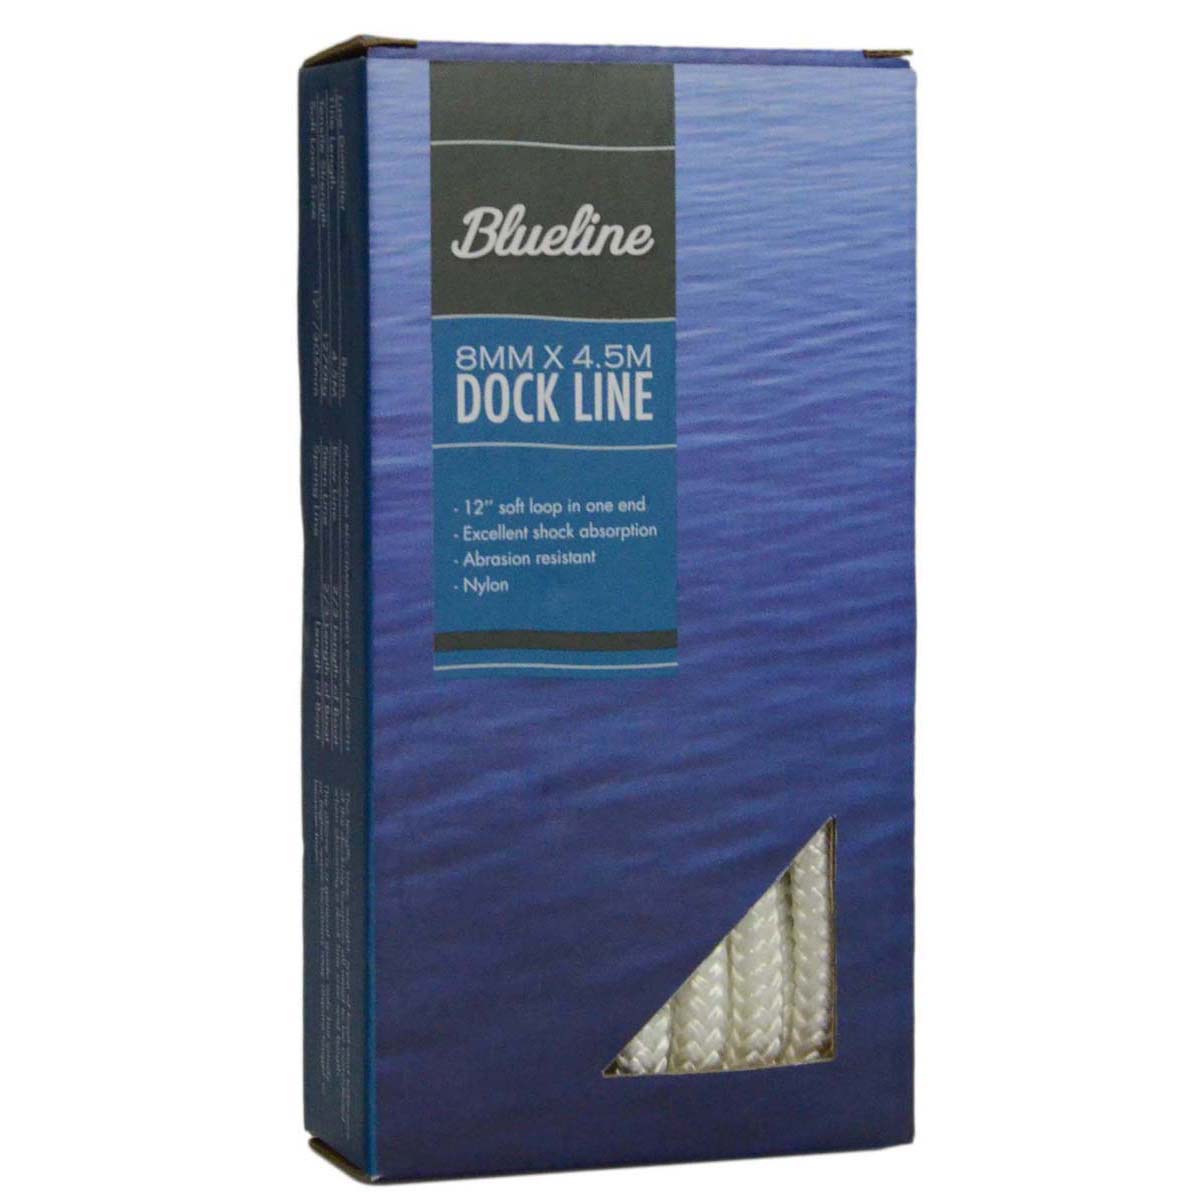 Blueline Dock Line 8mm x 4.5m